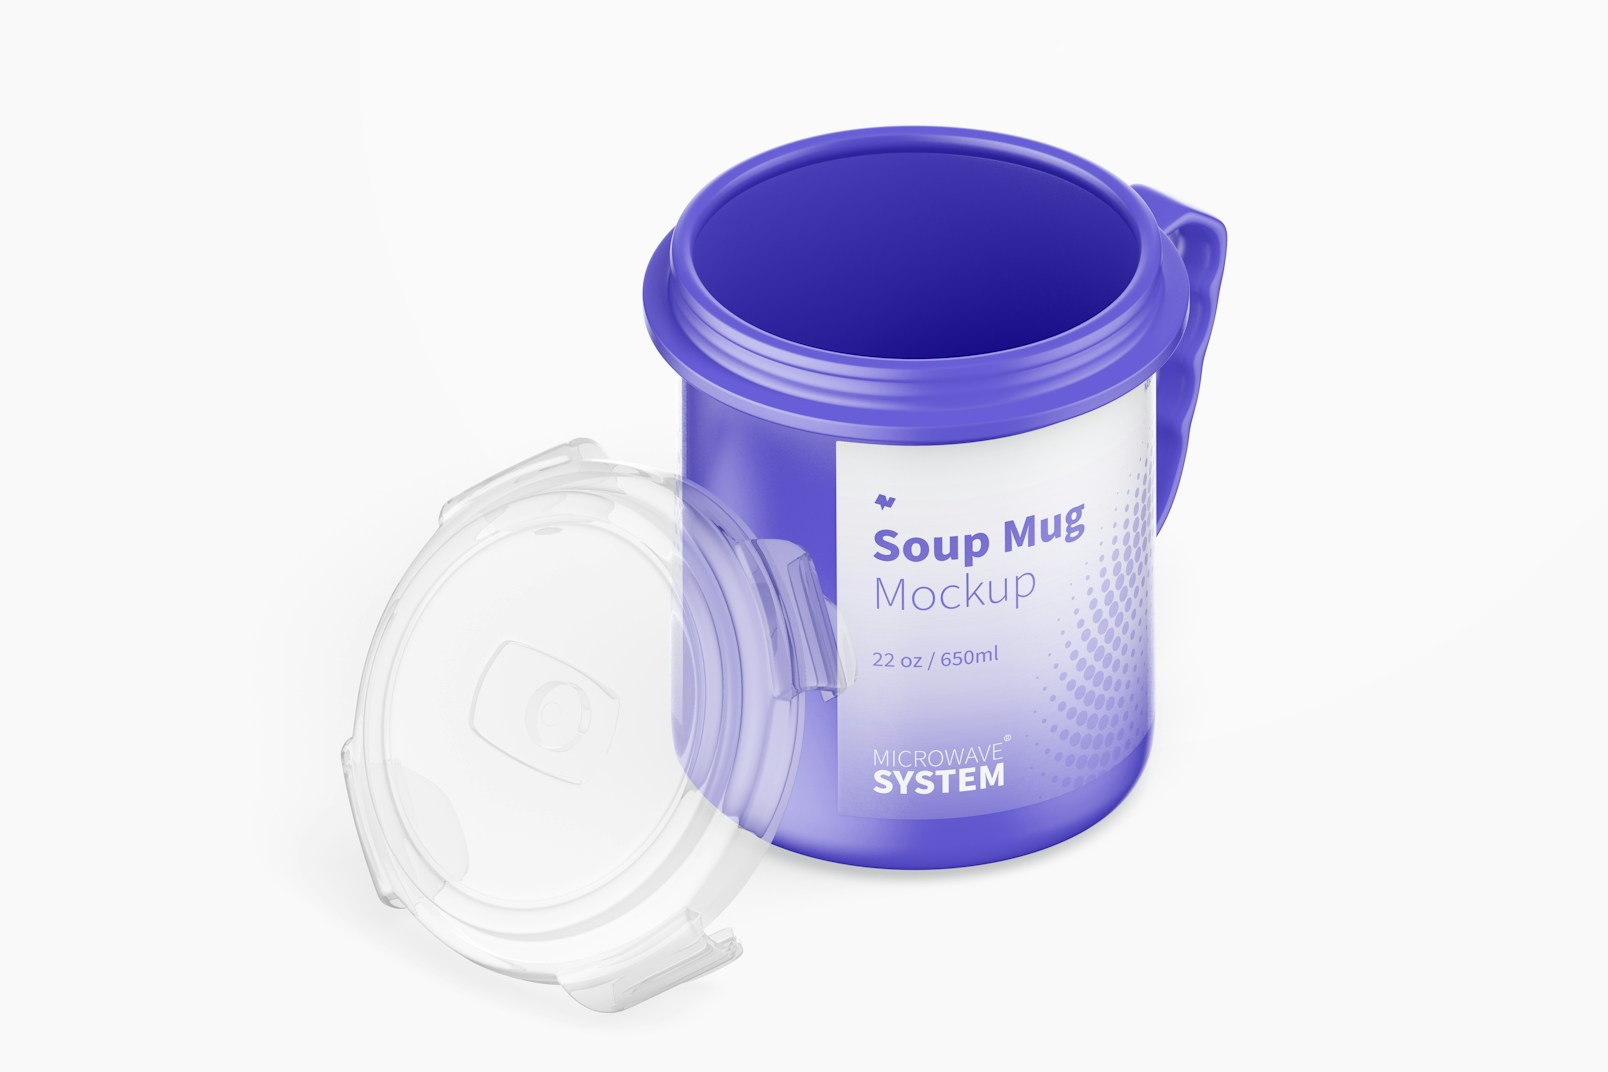 22 oz Soup Mugs Mockup, Isometric View